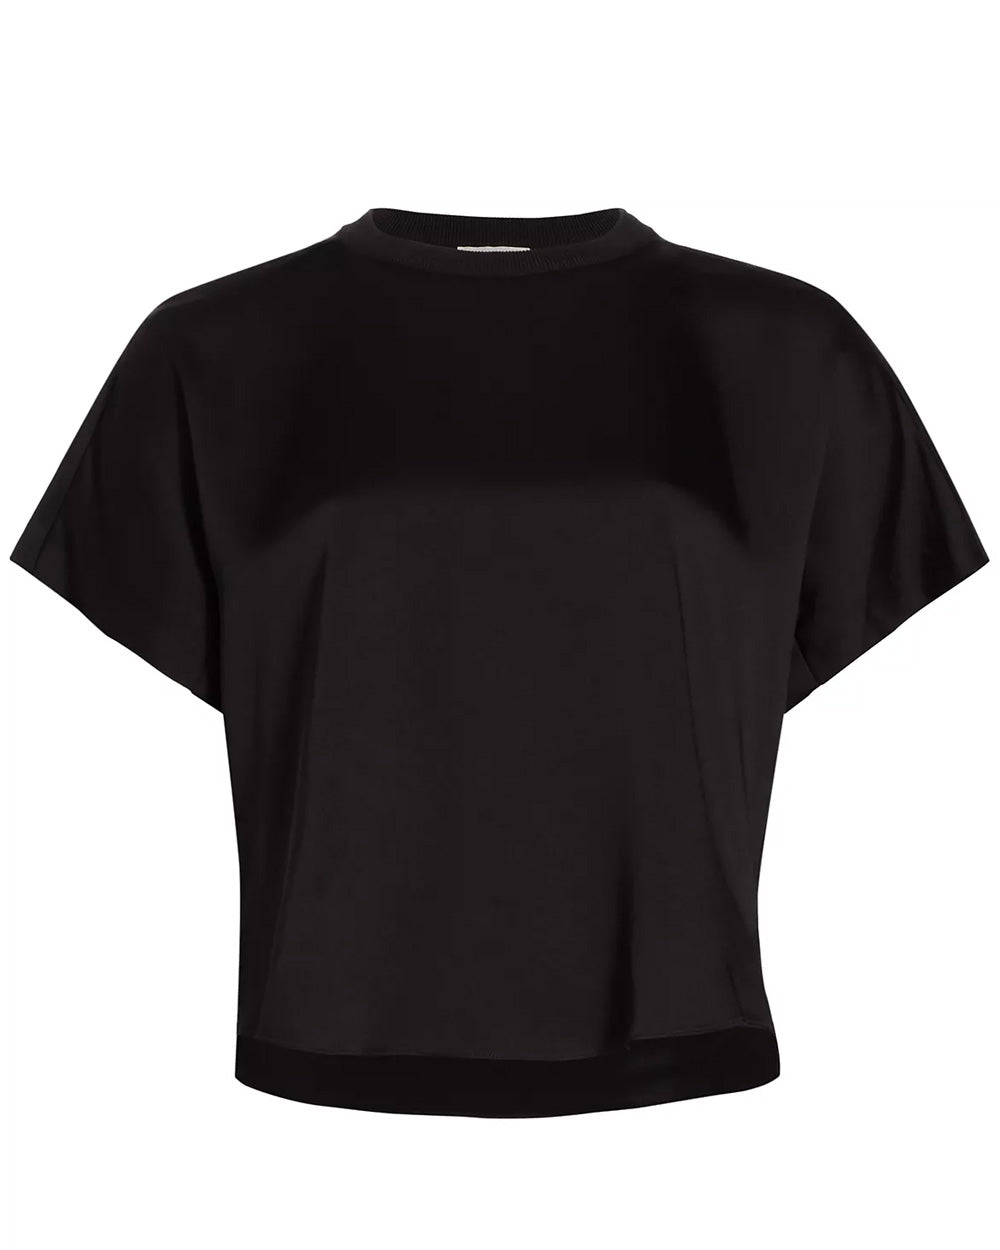 Black Addy Combo T-Shirt